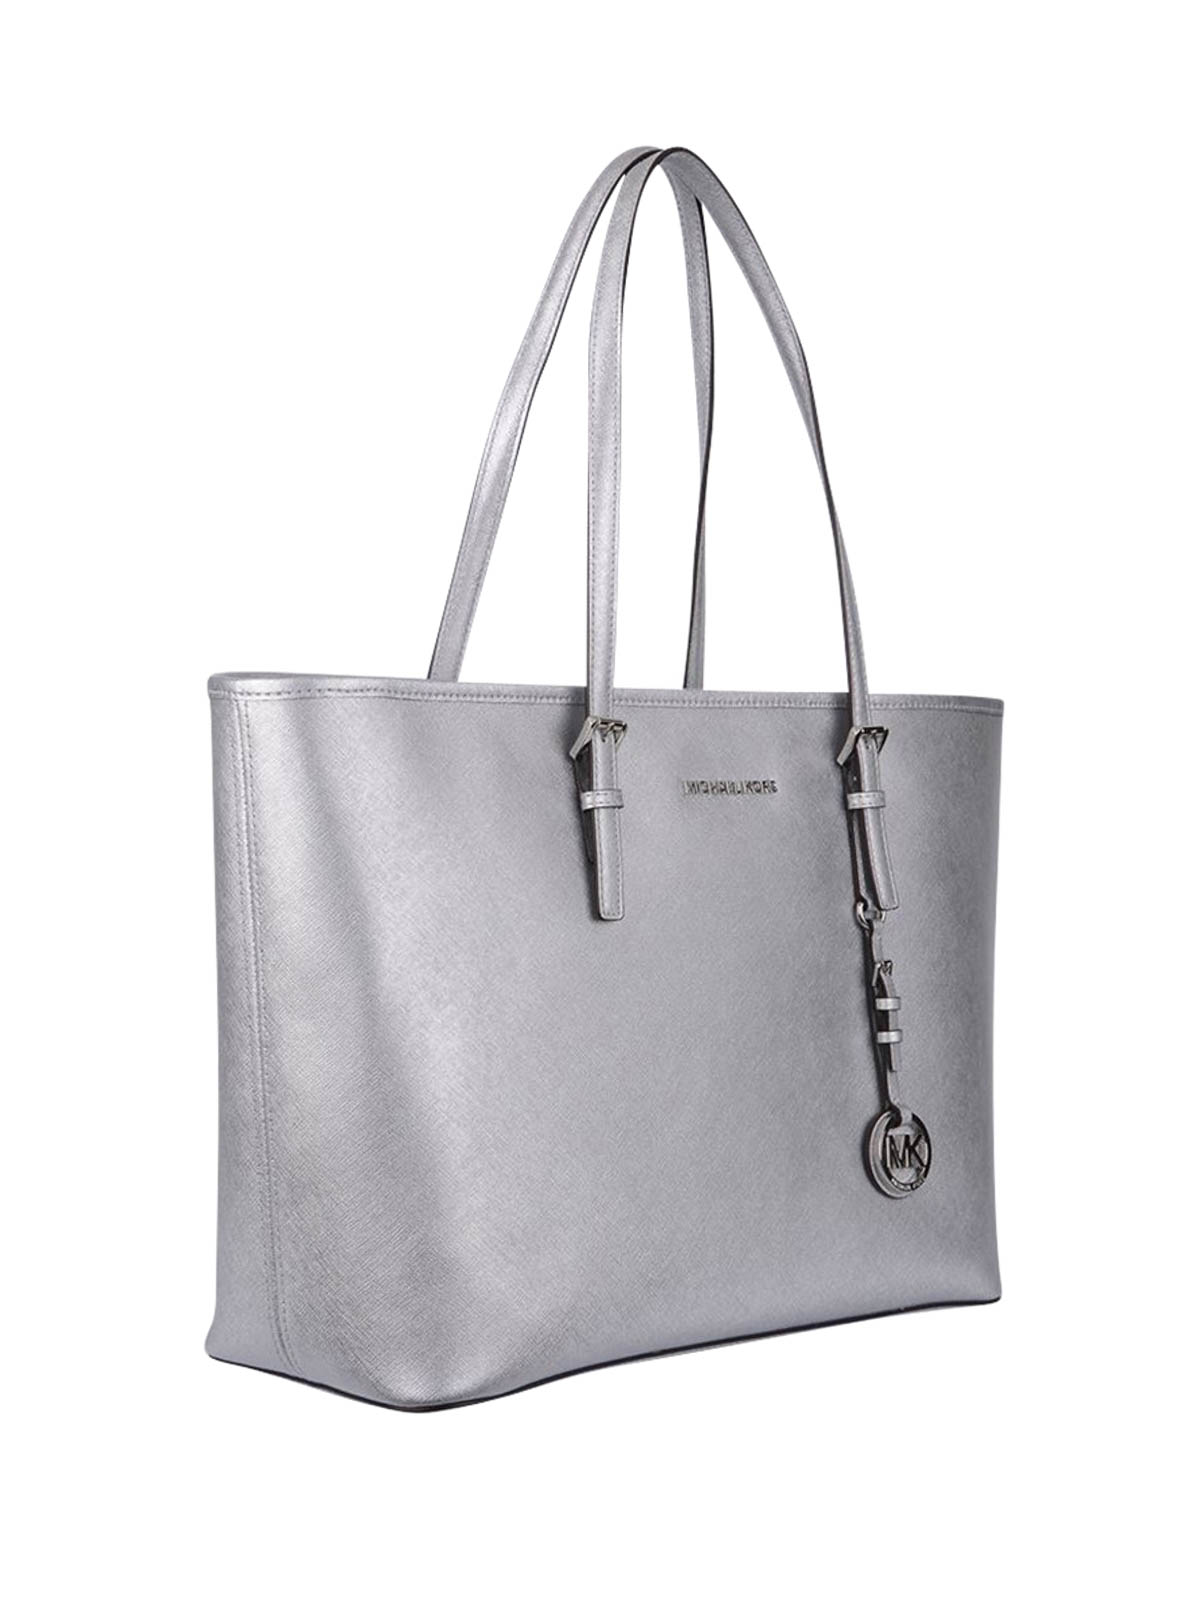 MICHAEL KORS MK Logo PVC Jet Set Travel Medium Carryall Tote Bag   BrownAcorn Womens Fashion Bags  Wallets Tote Bags on Carousell